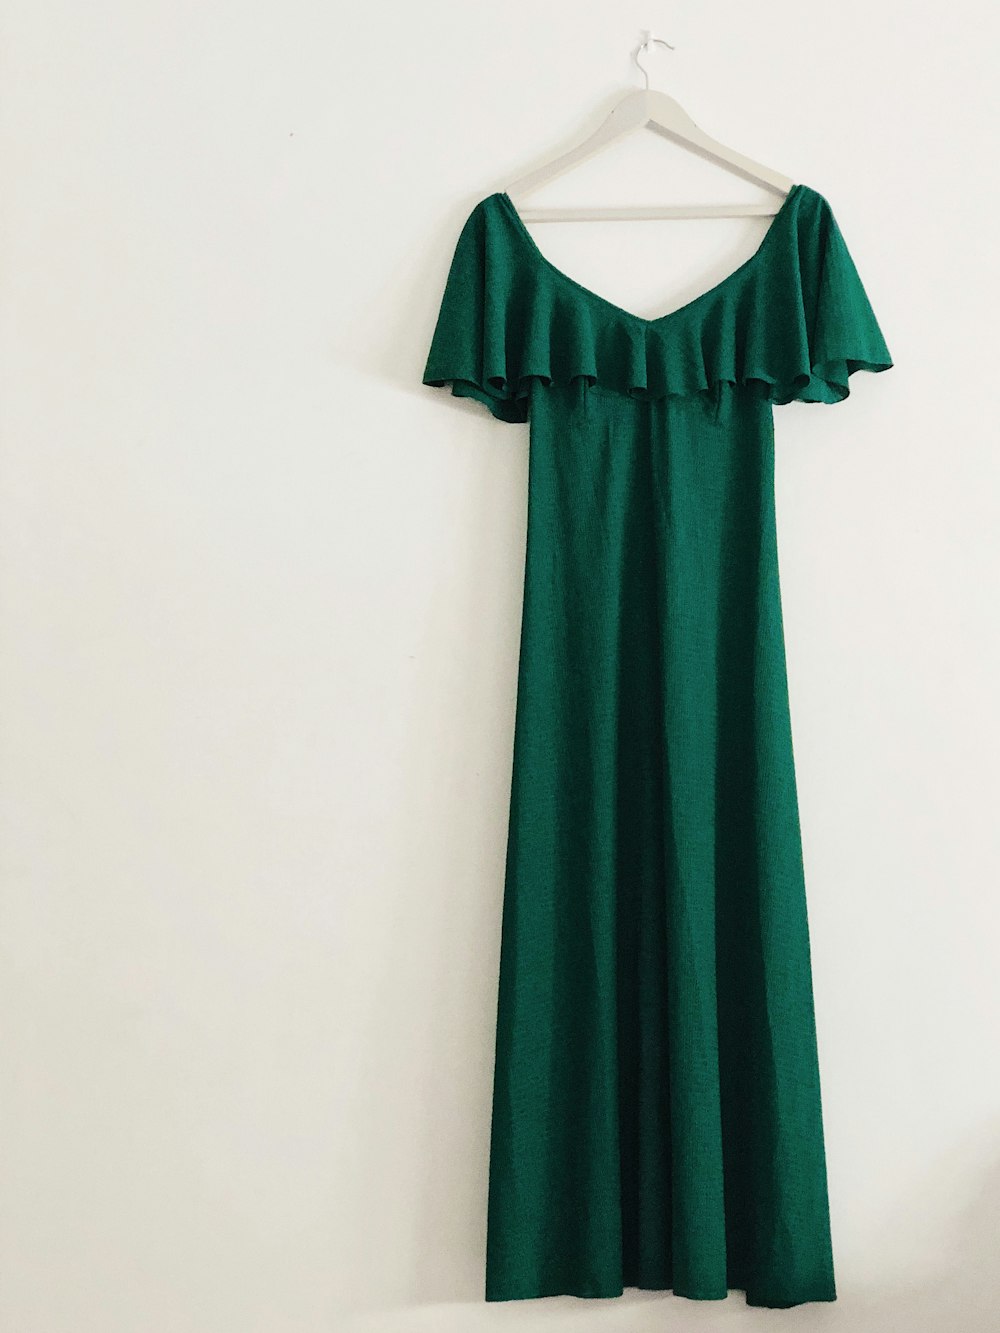 green sleeveless dress hanged on white wall